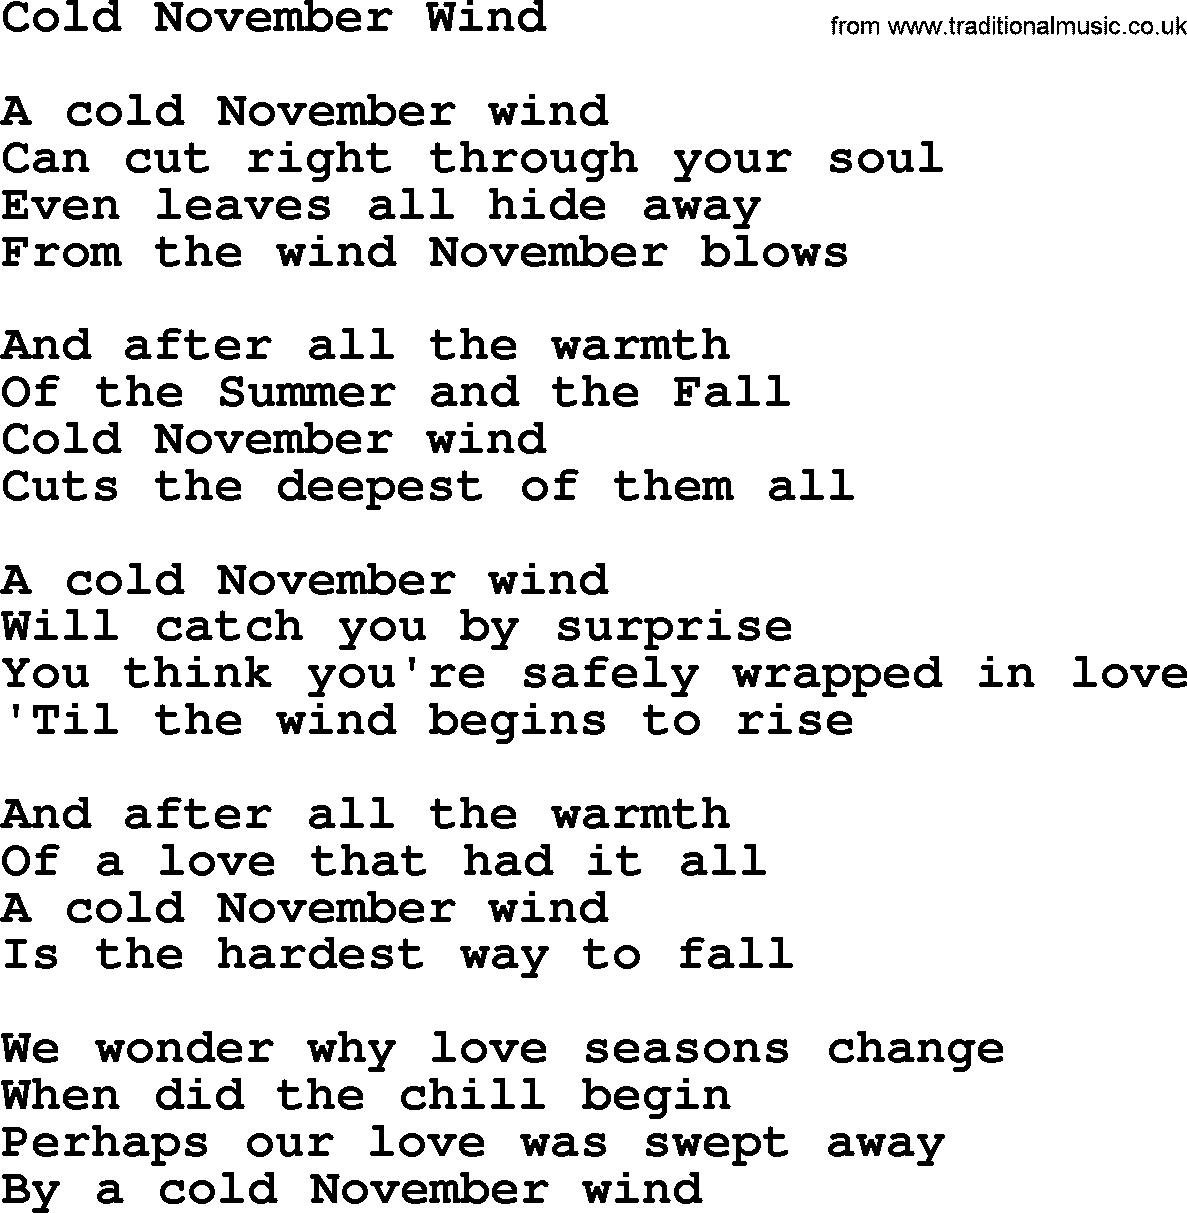 Willie Nelson song: Cold November Wind lyrics